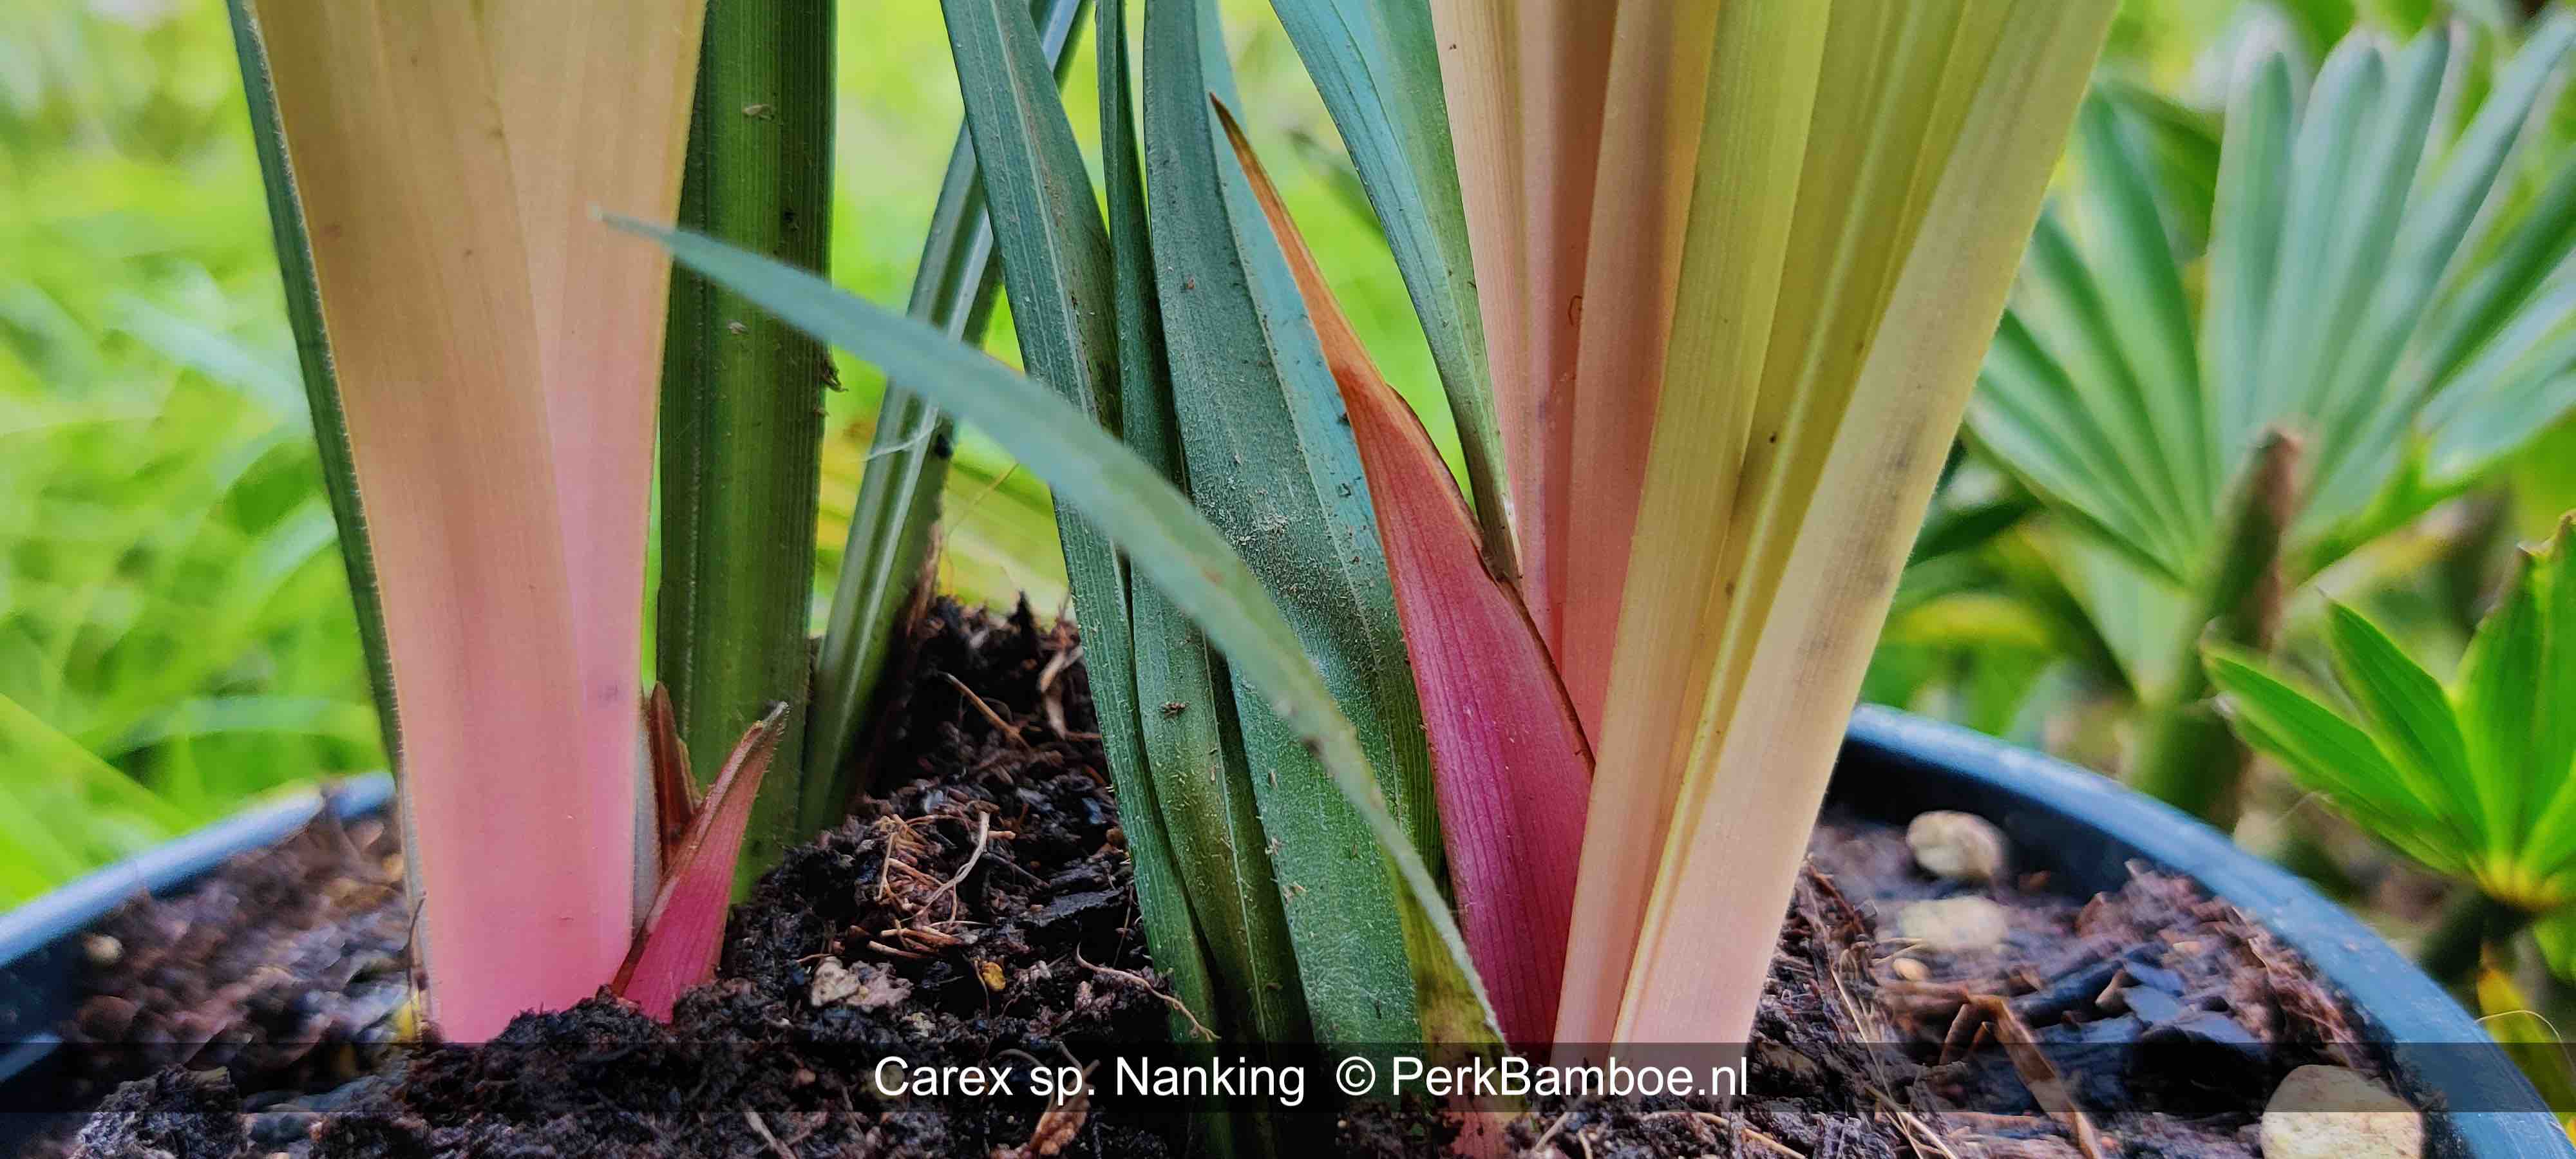 Carex Nanking 1 PerkBamboe nl